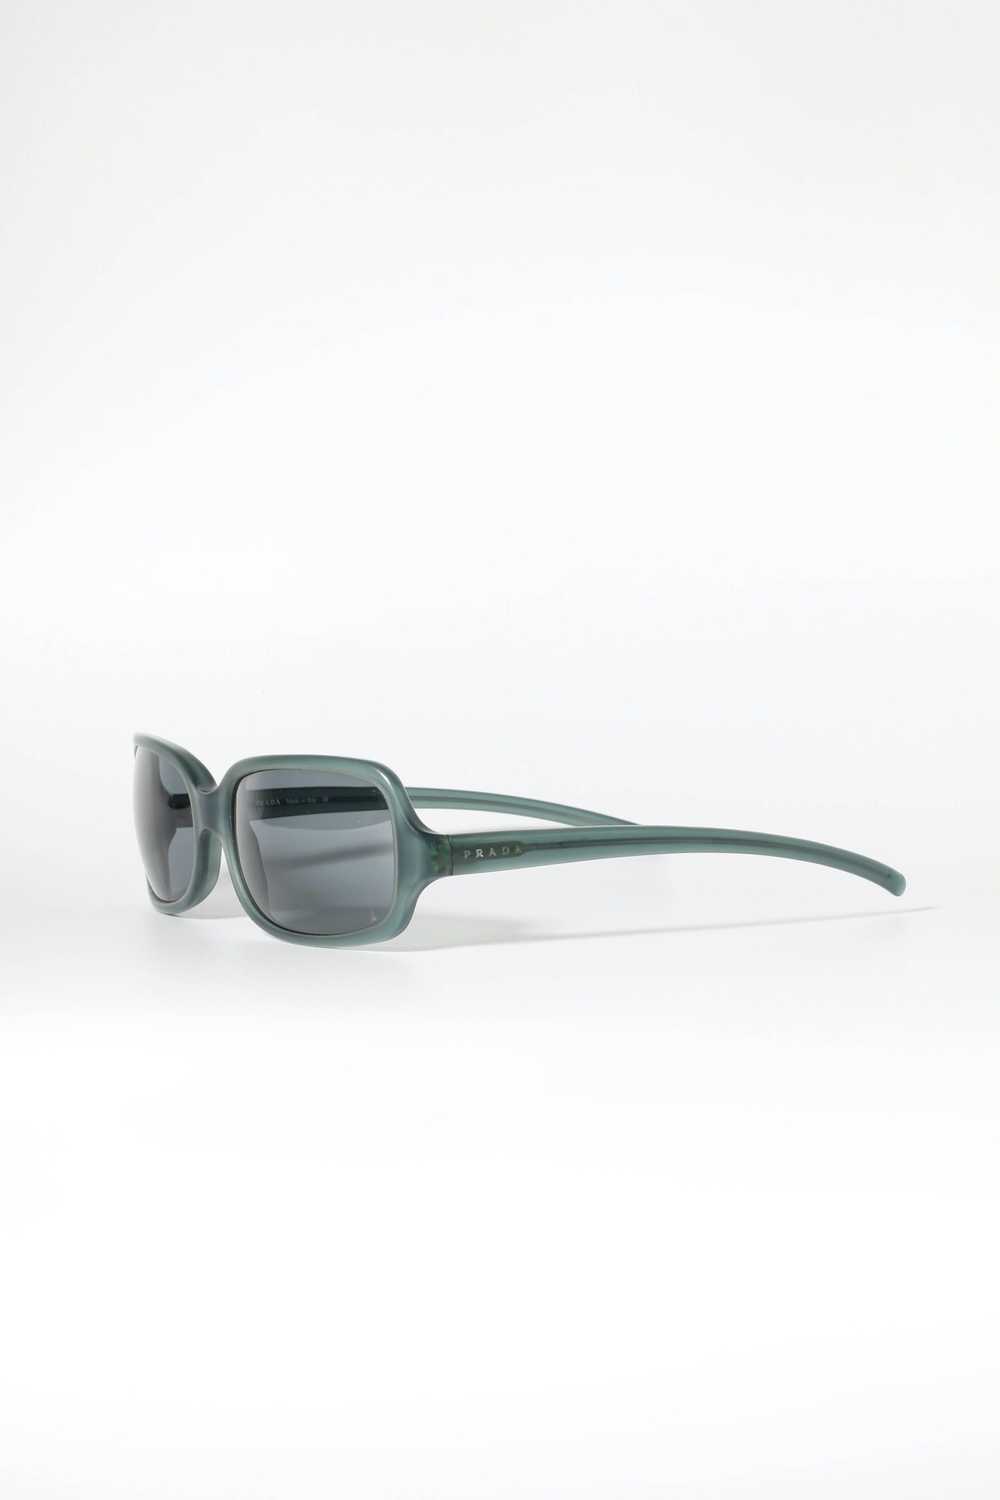 Prada Prada SS2000 sunglasses - image 4